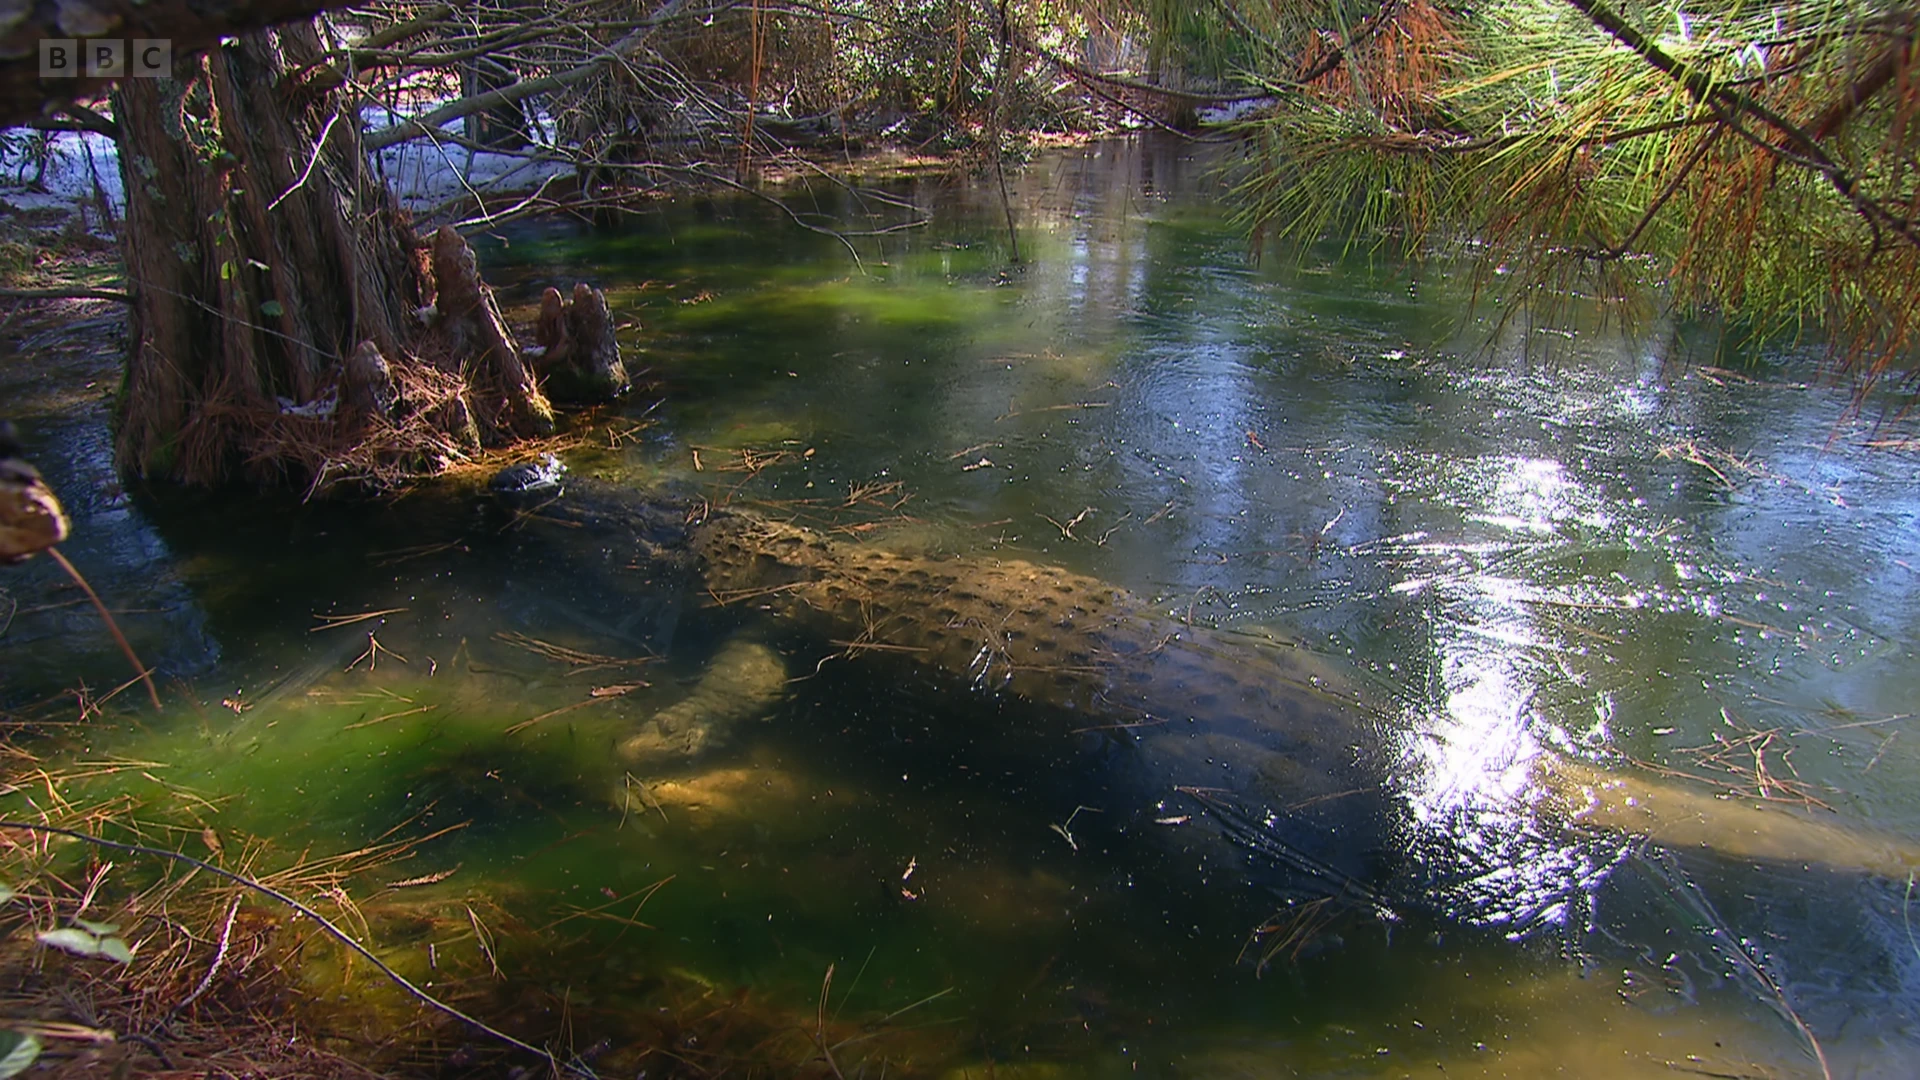 American alligator (Alligator mississippiensis) as shown in Seven Worlds, One Planet - North America